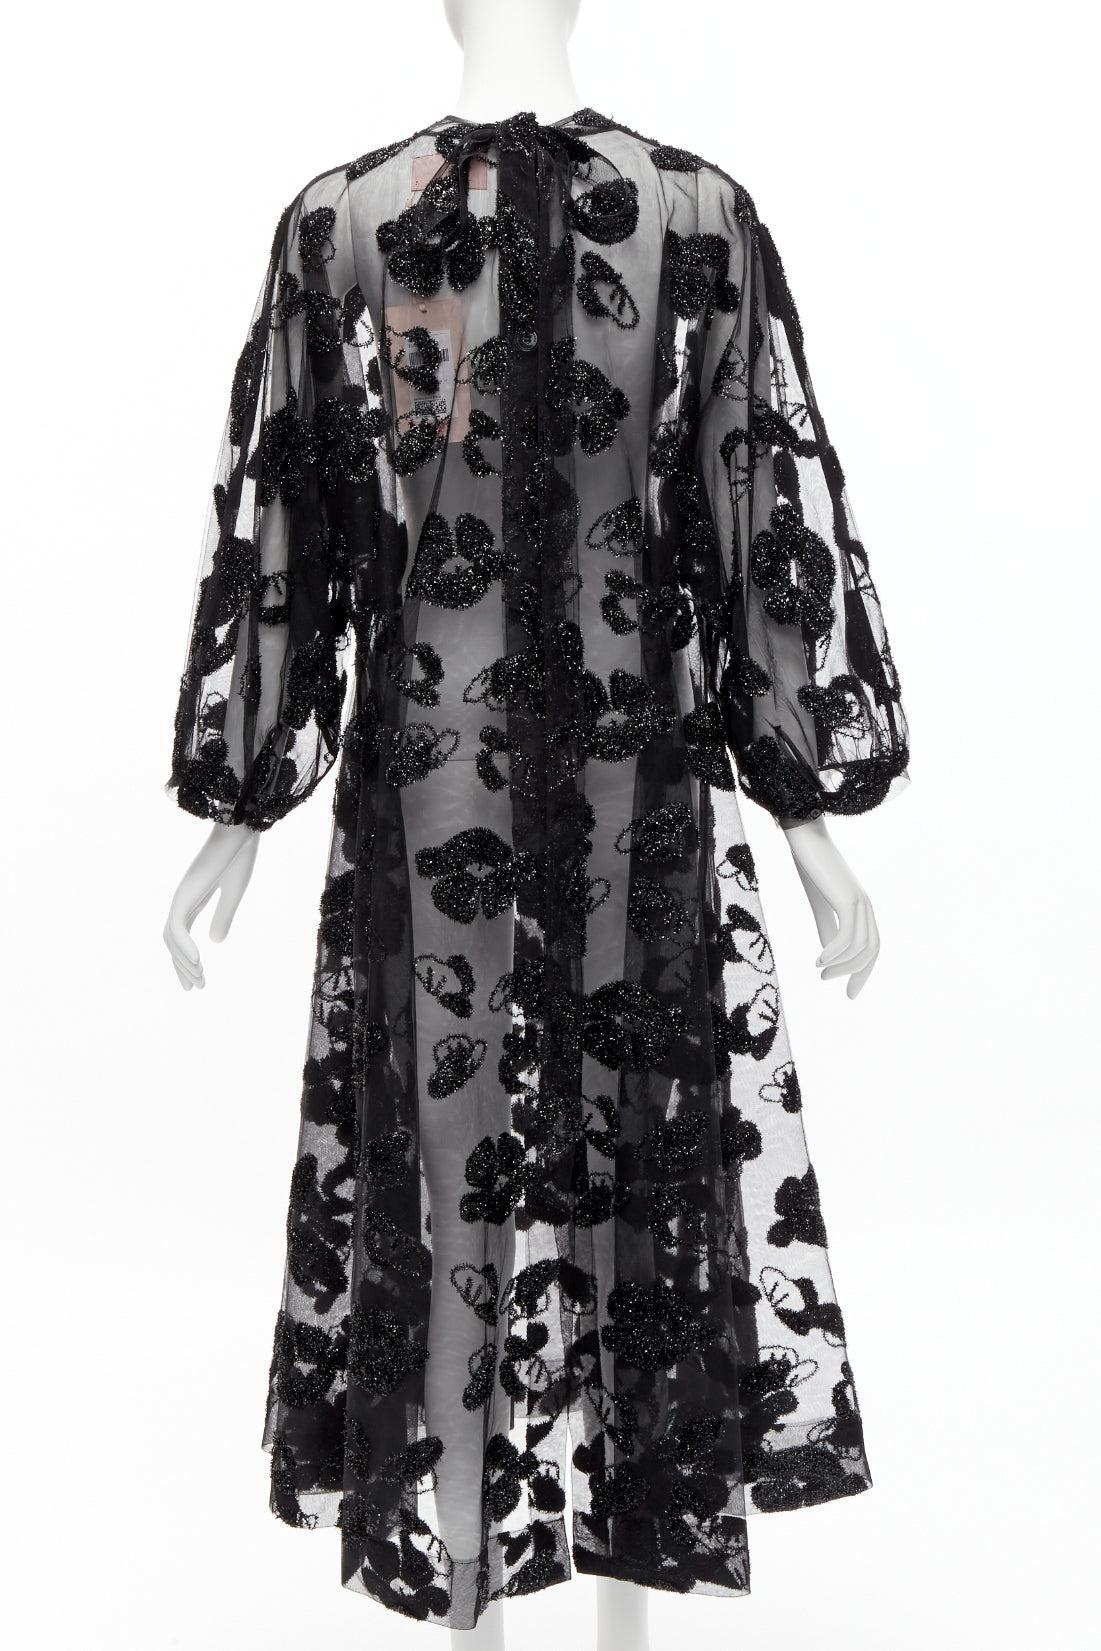 new SIMONE ROCHA H&M tinsel floral embroidery sheer dolman midi dress UK6 XS 1